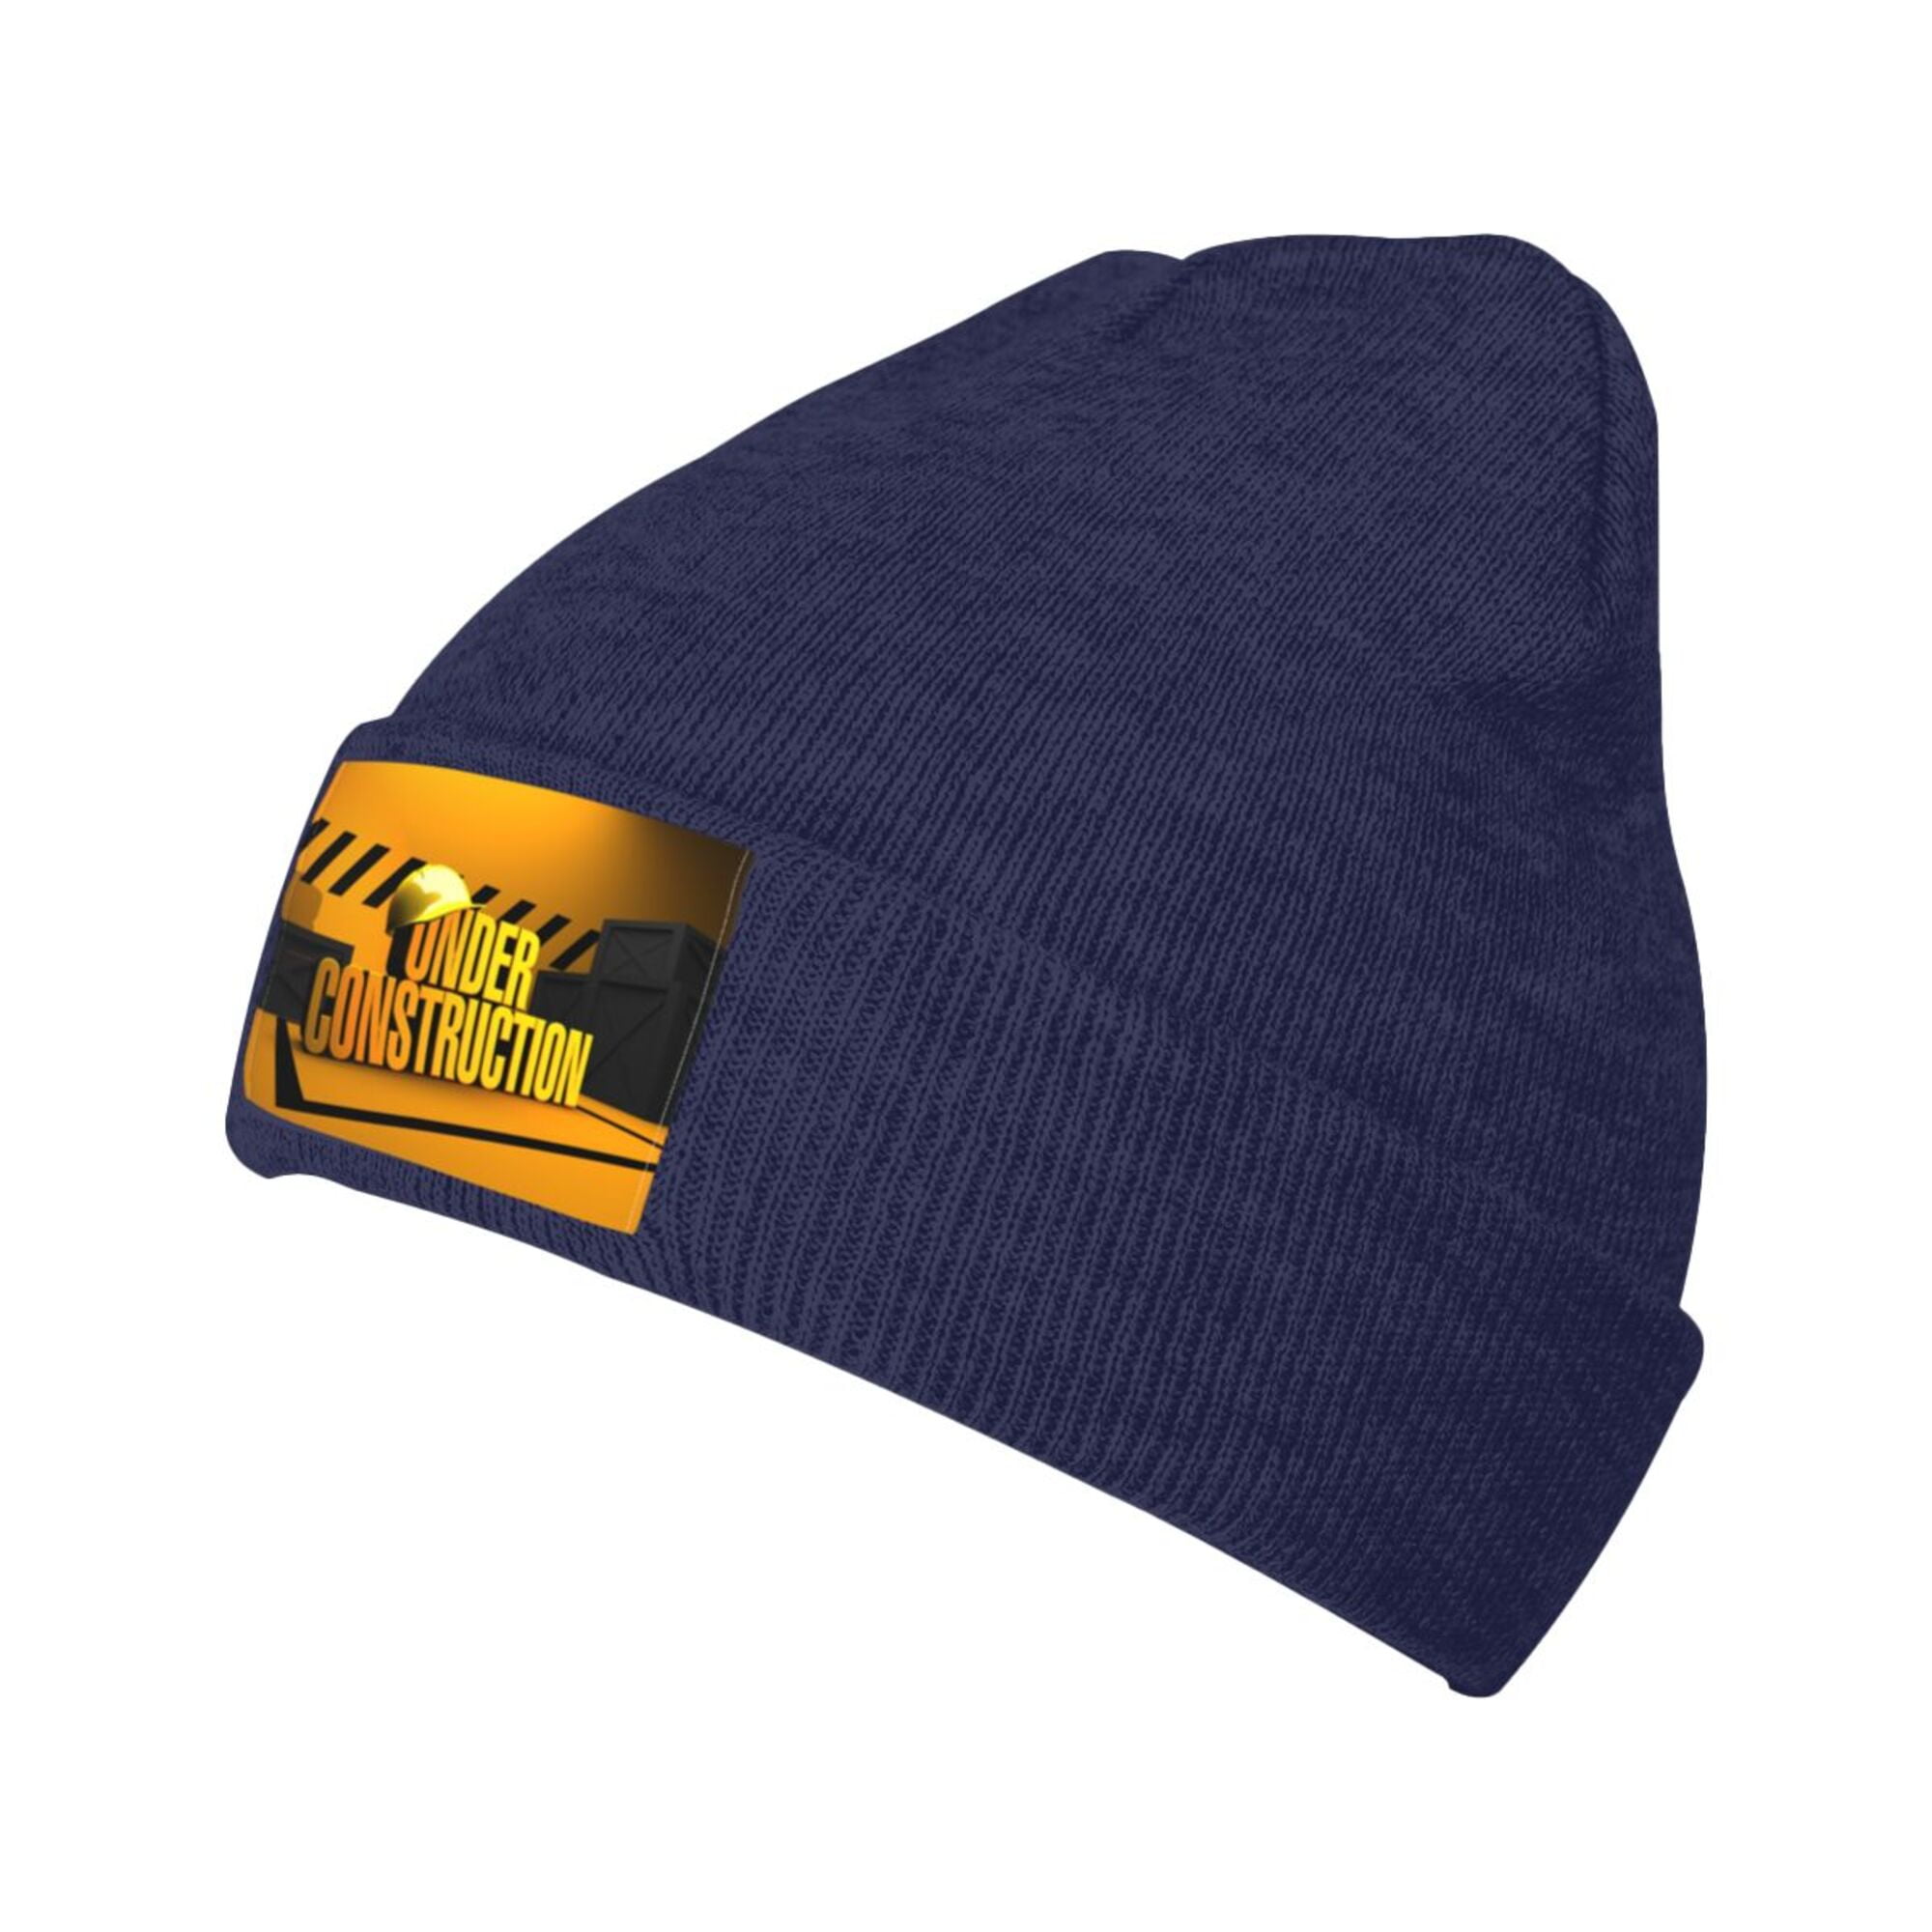 ZICANCN Knit Beanie Hat-Under Construction Winter Cap Soft Warm Classic  Hats for Men Women Site Build Work